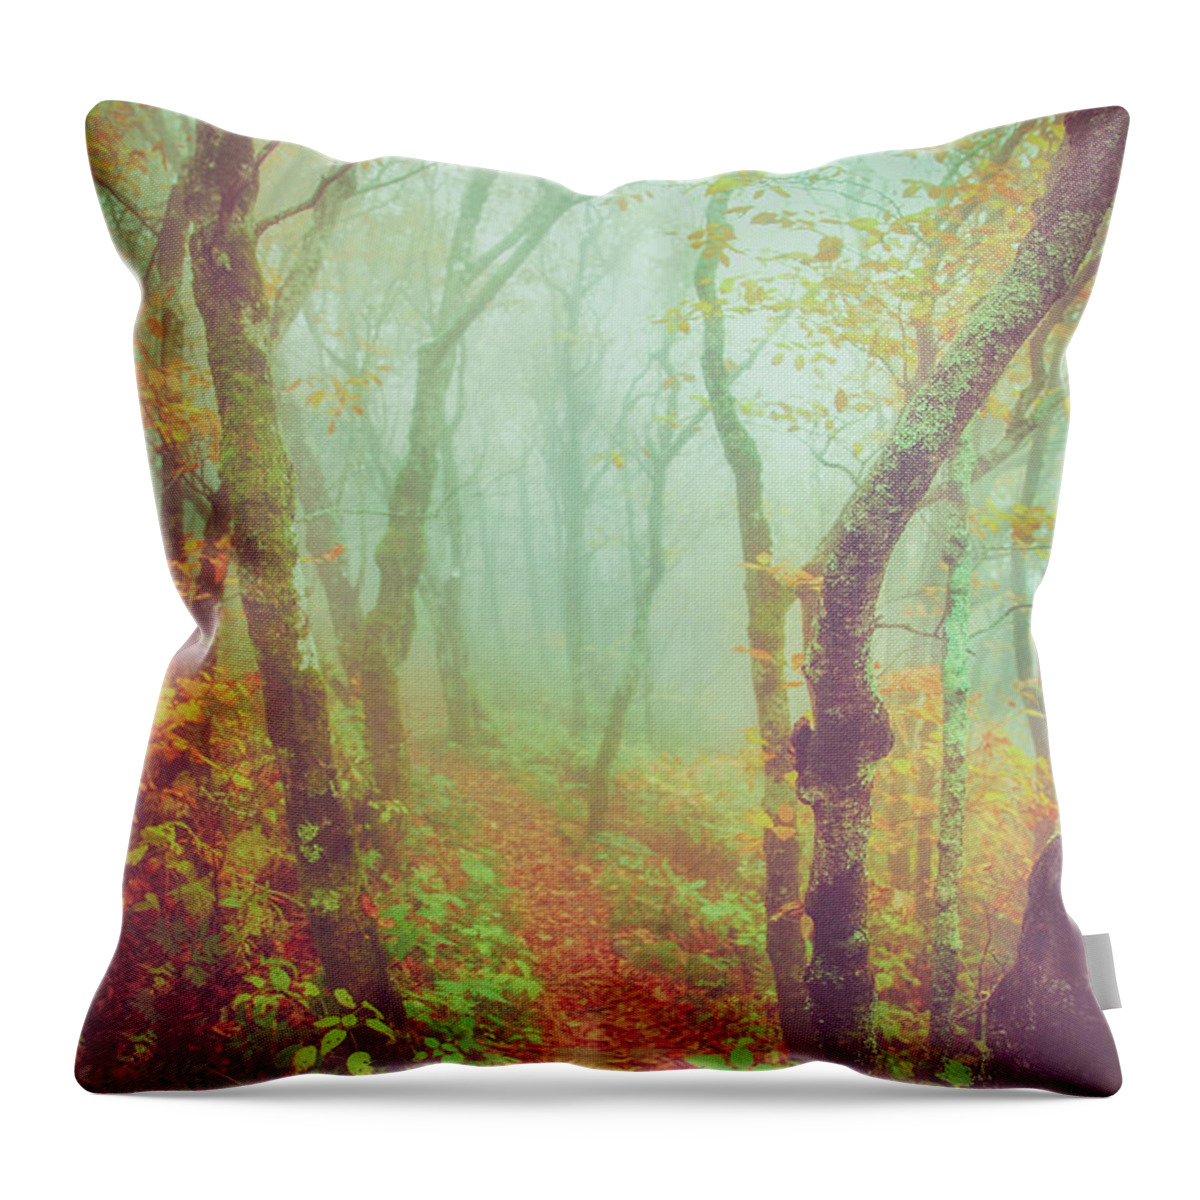 Autumn Throw Pillow featuring the photograph Fairytale Fall by Carrie Ann Grippo-Pike